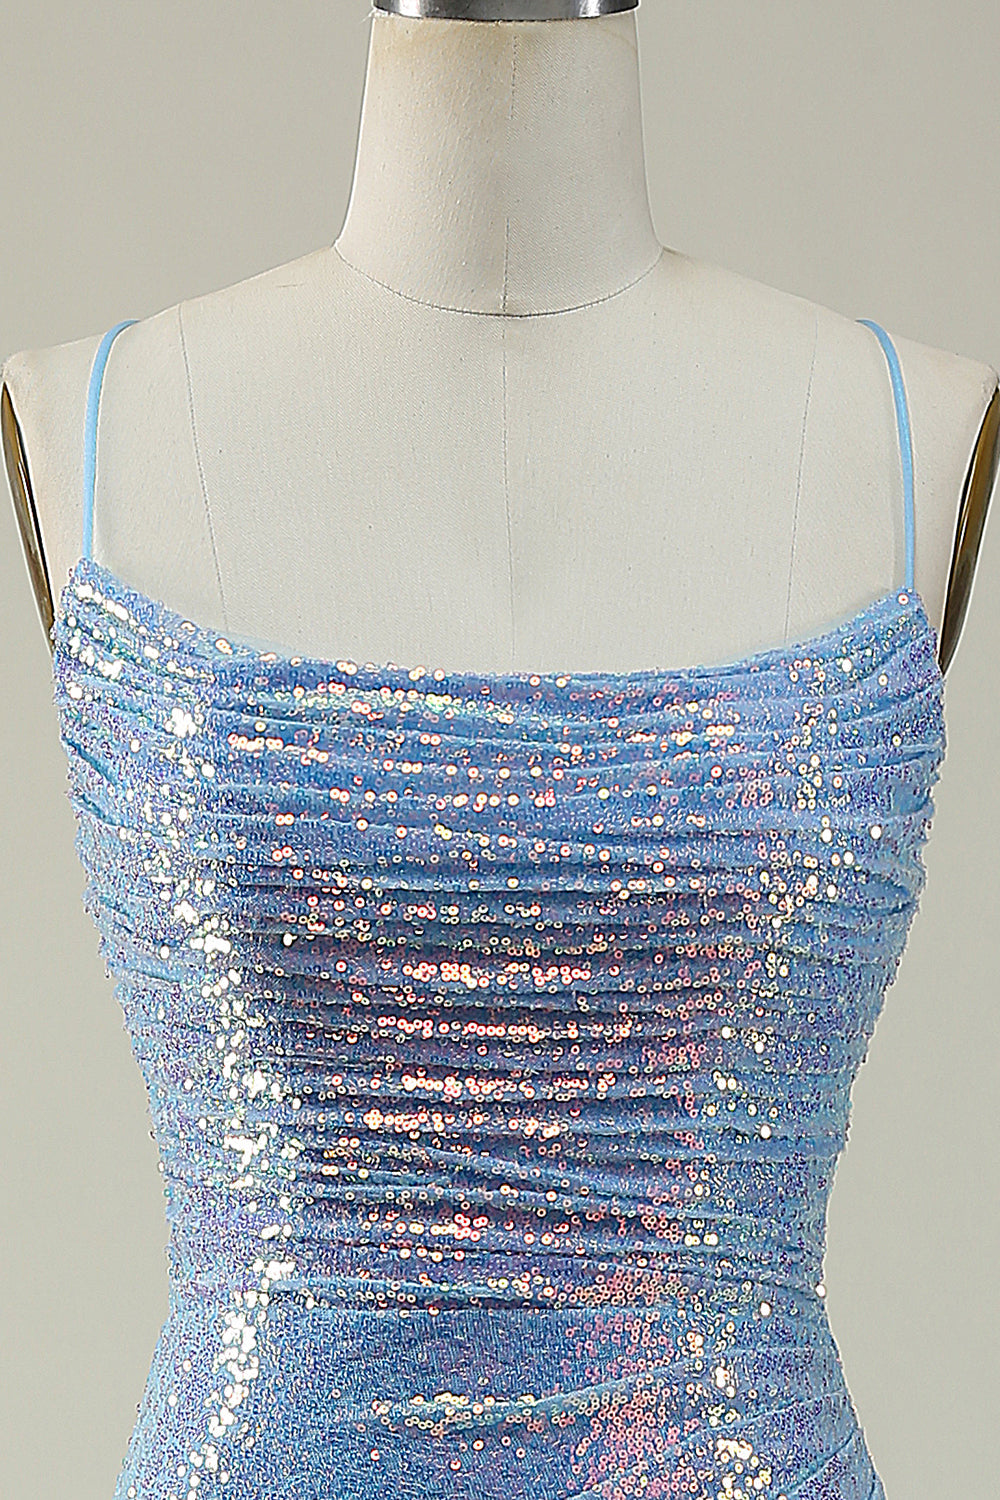 Blue Mermaid Sequined Spaghetti Straps Mermaid Prom Dress